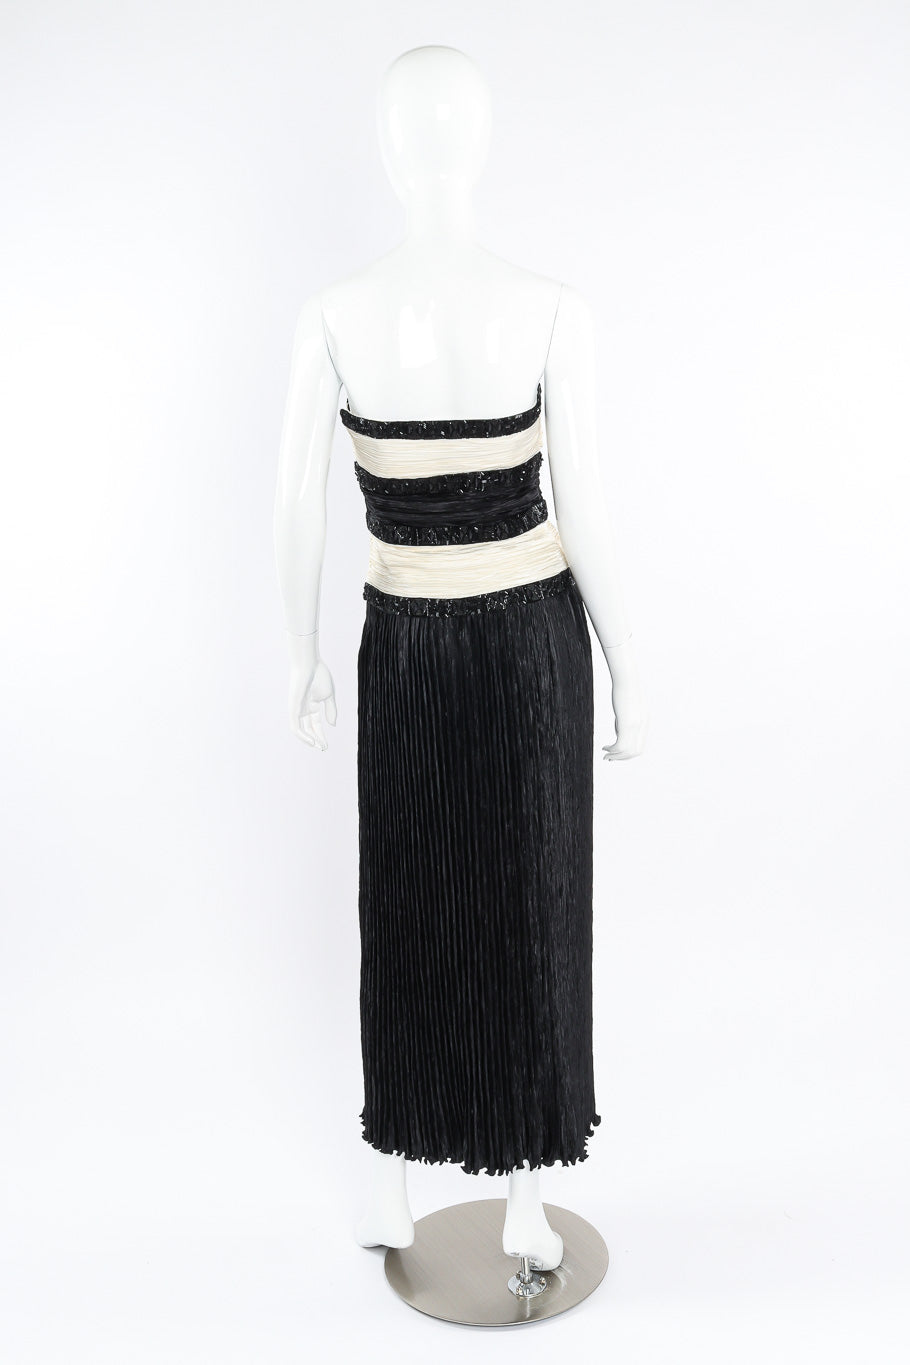 Plisse dress by Mary McFadden on mannequin back @recessla